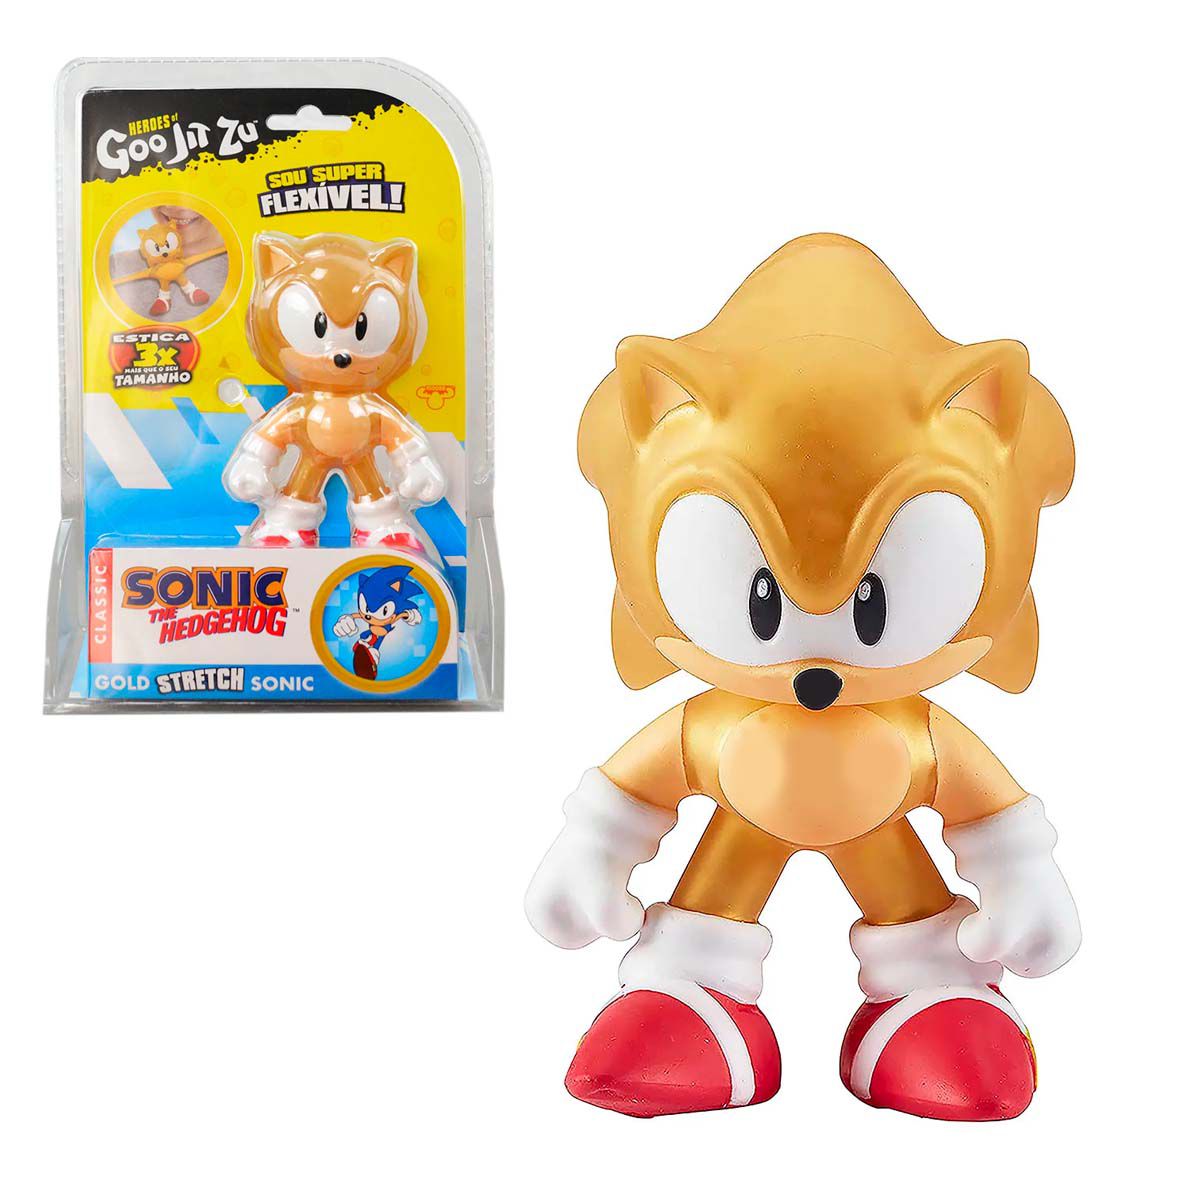 Sonic Elástico Brinquedo Estica Classico 13cm - Dourado - Shop Macrozao